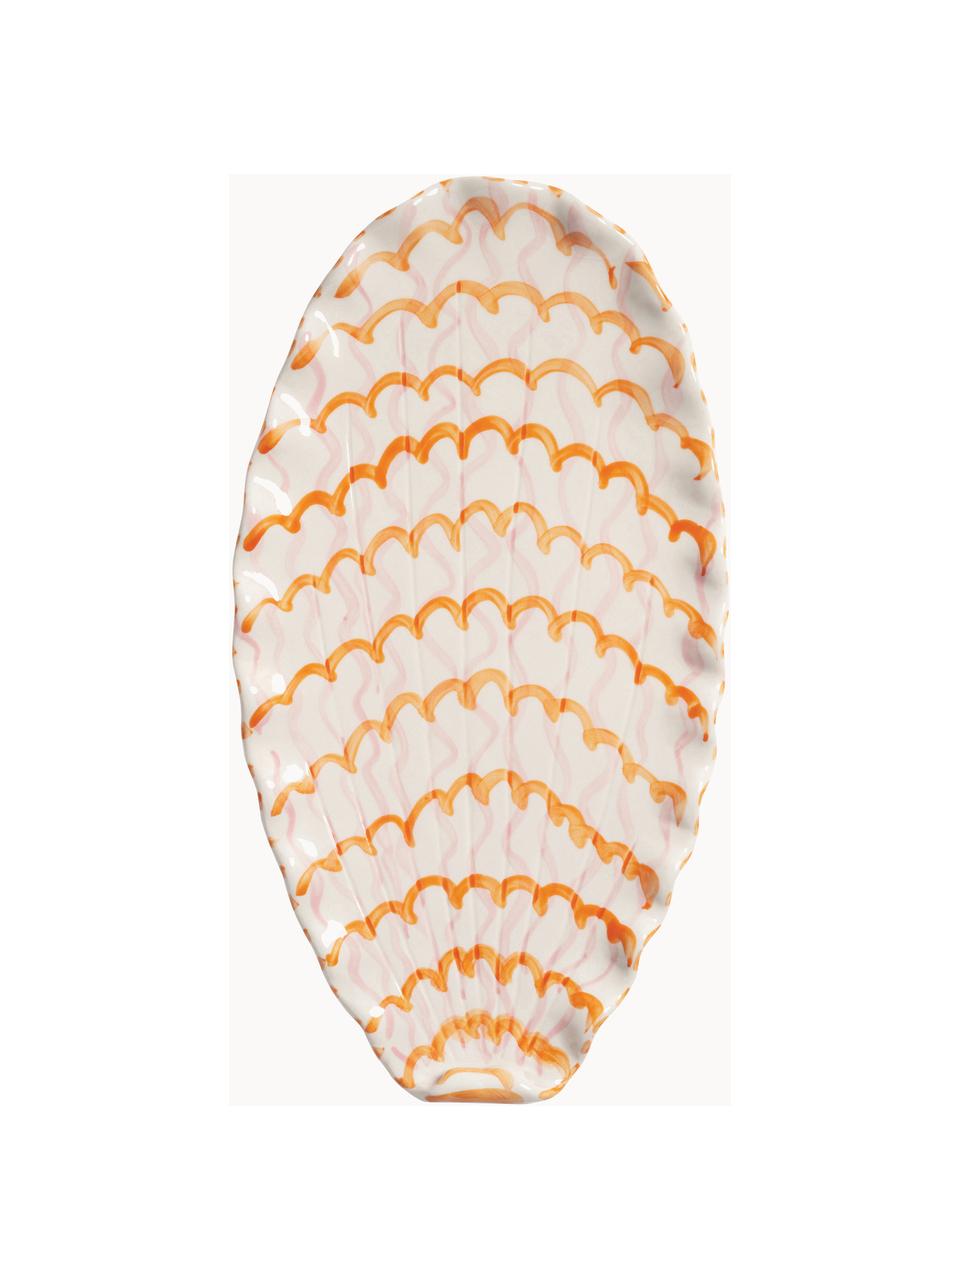 Serveerplateau Shellegance, L 35 cm, Keramiek, geglazuurd, Gebroken wit, oranje, lichtroze, B 35 x D 19 cm